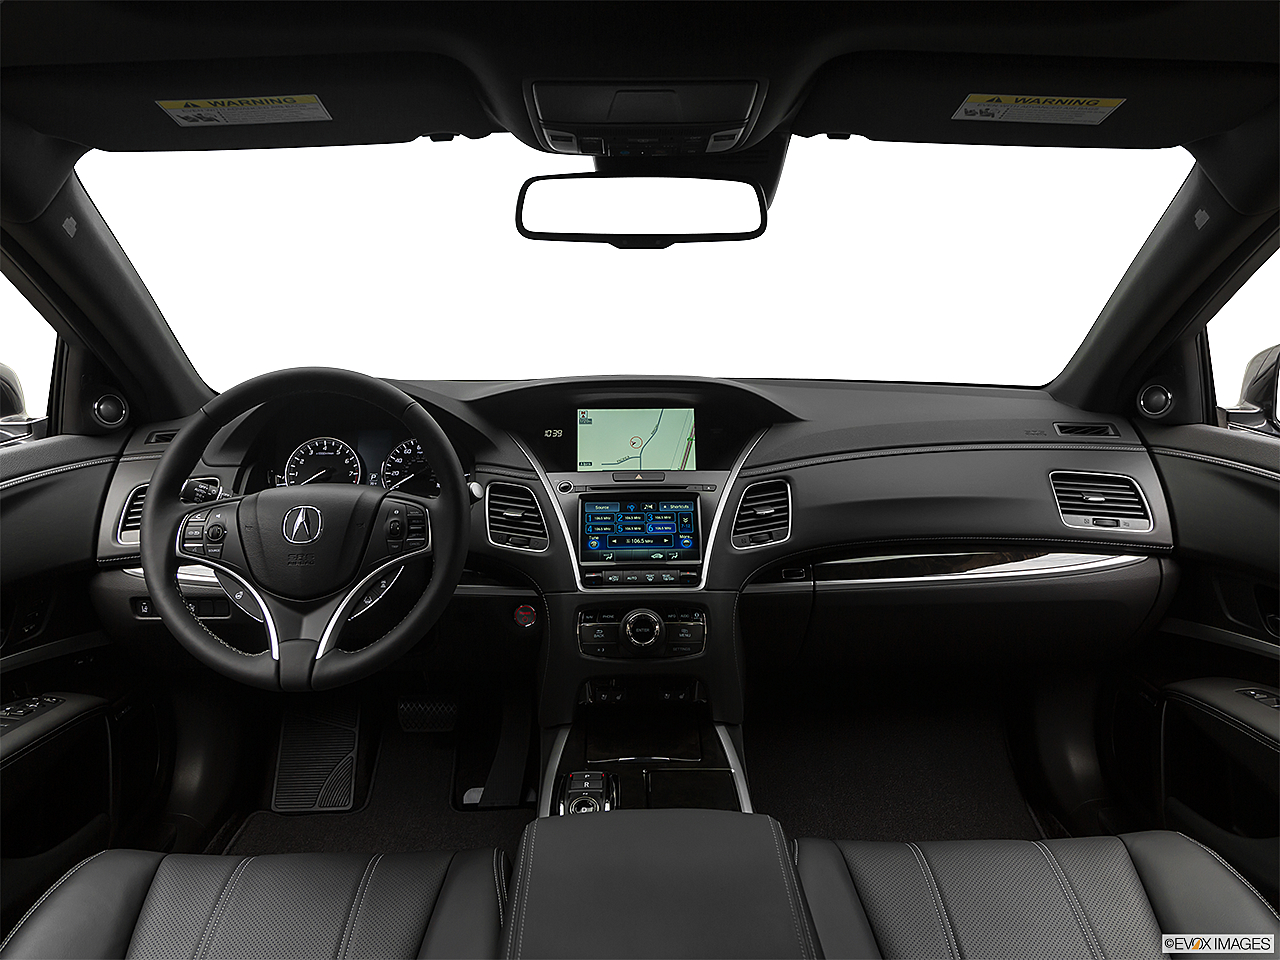 2019 Acura RLX SH-AWD Sport Hybrid 4dr Sedan w/Advance Package - Research -  GrooveCar